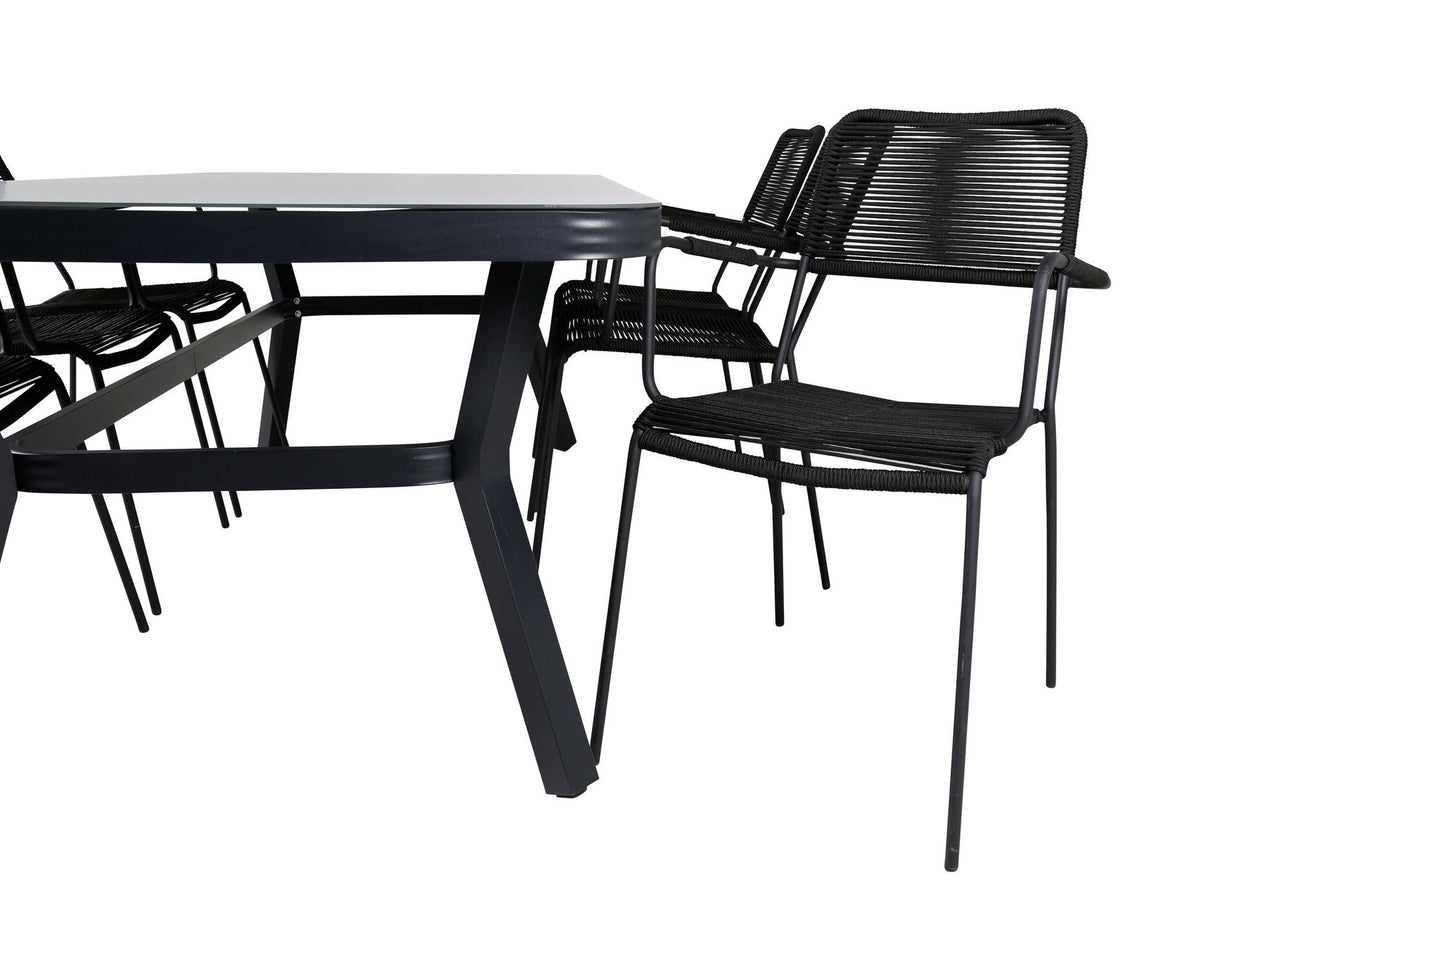 Virya - Spisebord, Sort Alu / Grå glas - big table+Lidos Stol m. armlæn - Sort Alu / Sort Reb